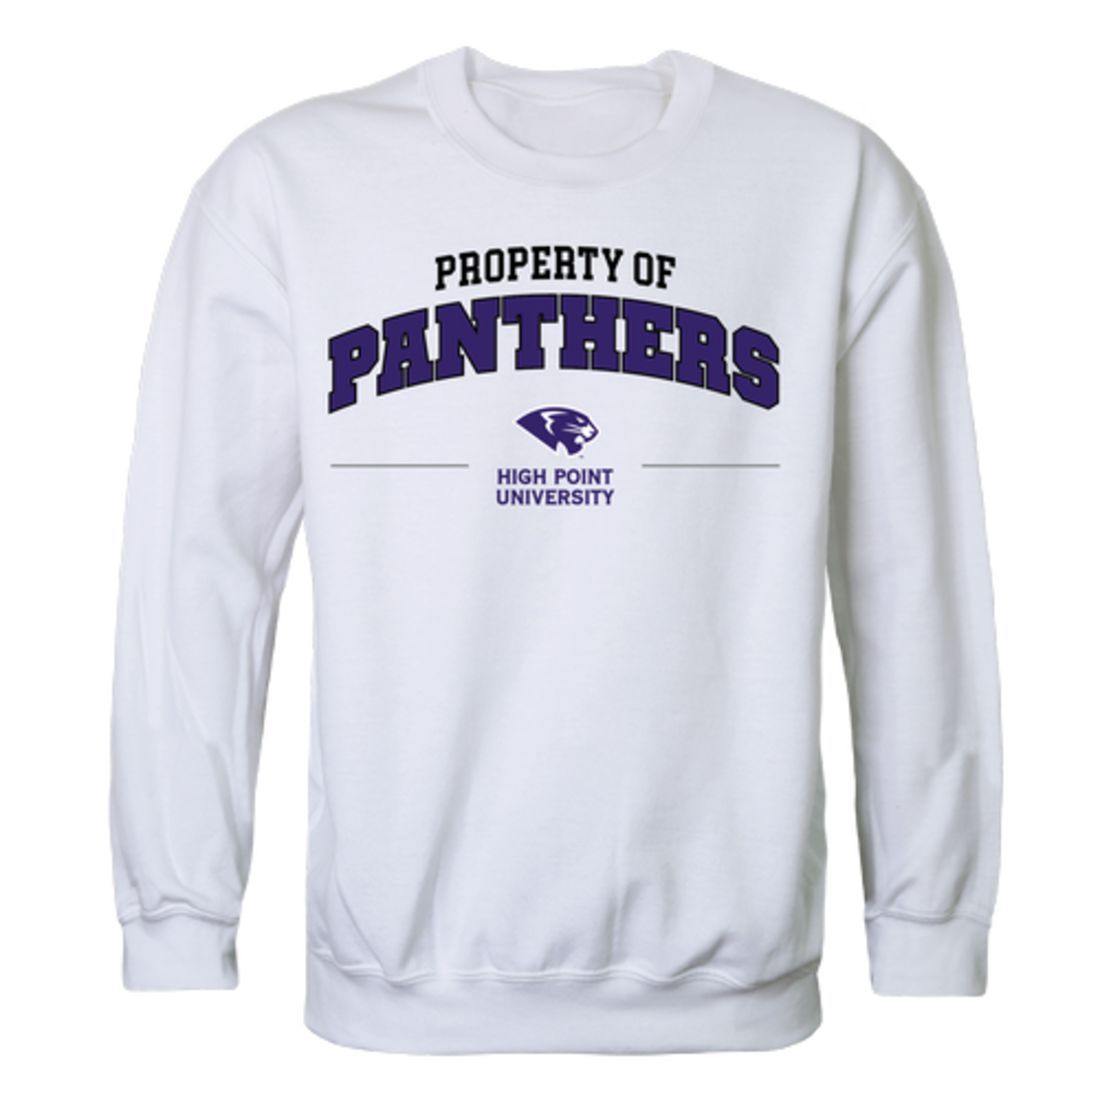 HPU High Point University Panthers Property Crewneck Pullover Sweatshirt Sweater White-Campus-Wardrobe